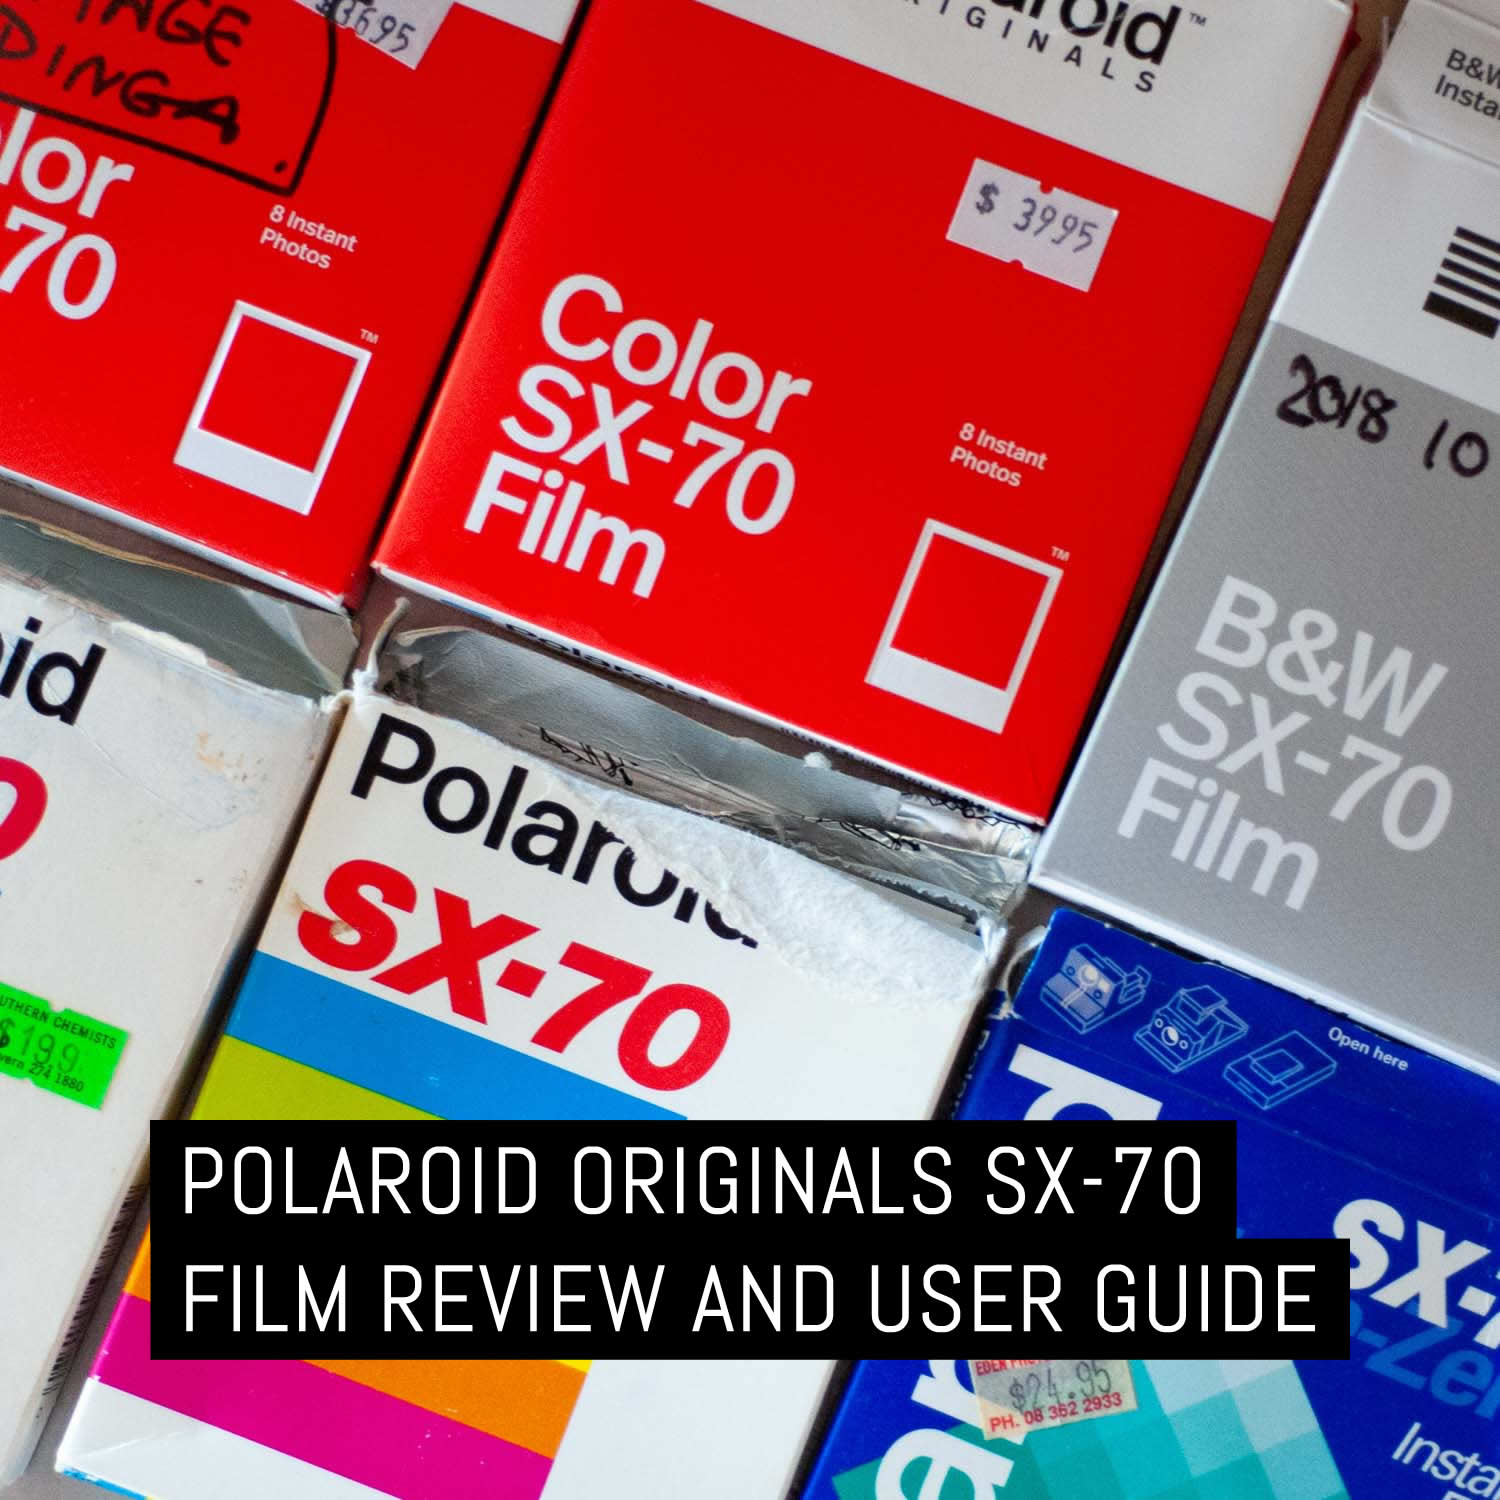 Polaroid Originals SX-70 film review and user guide